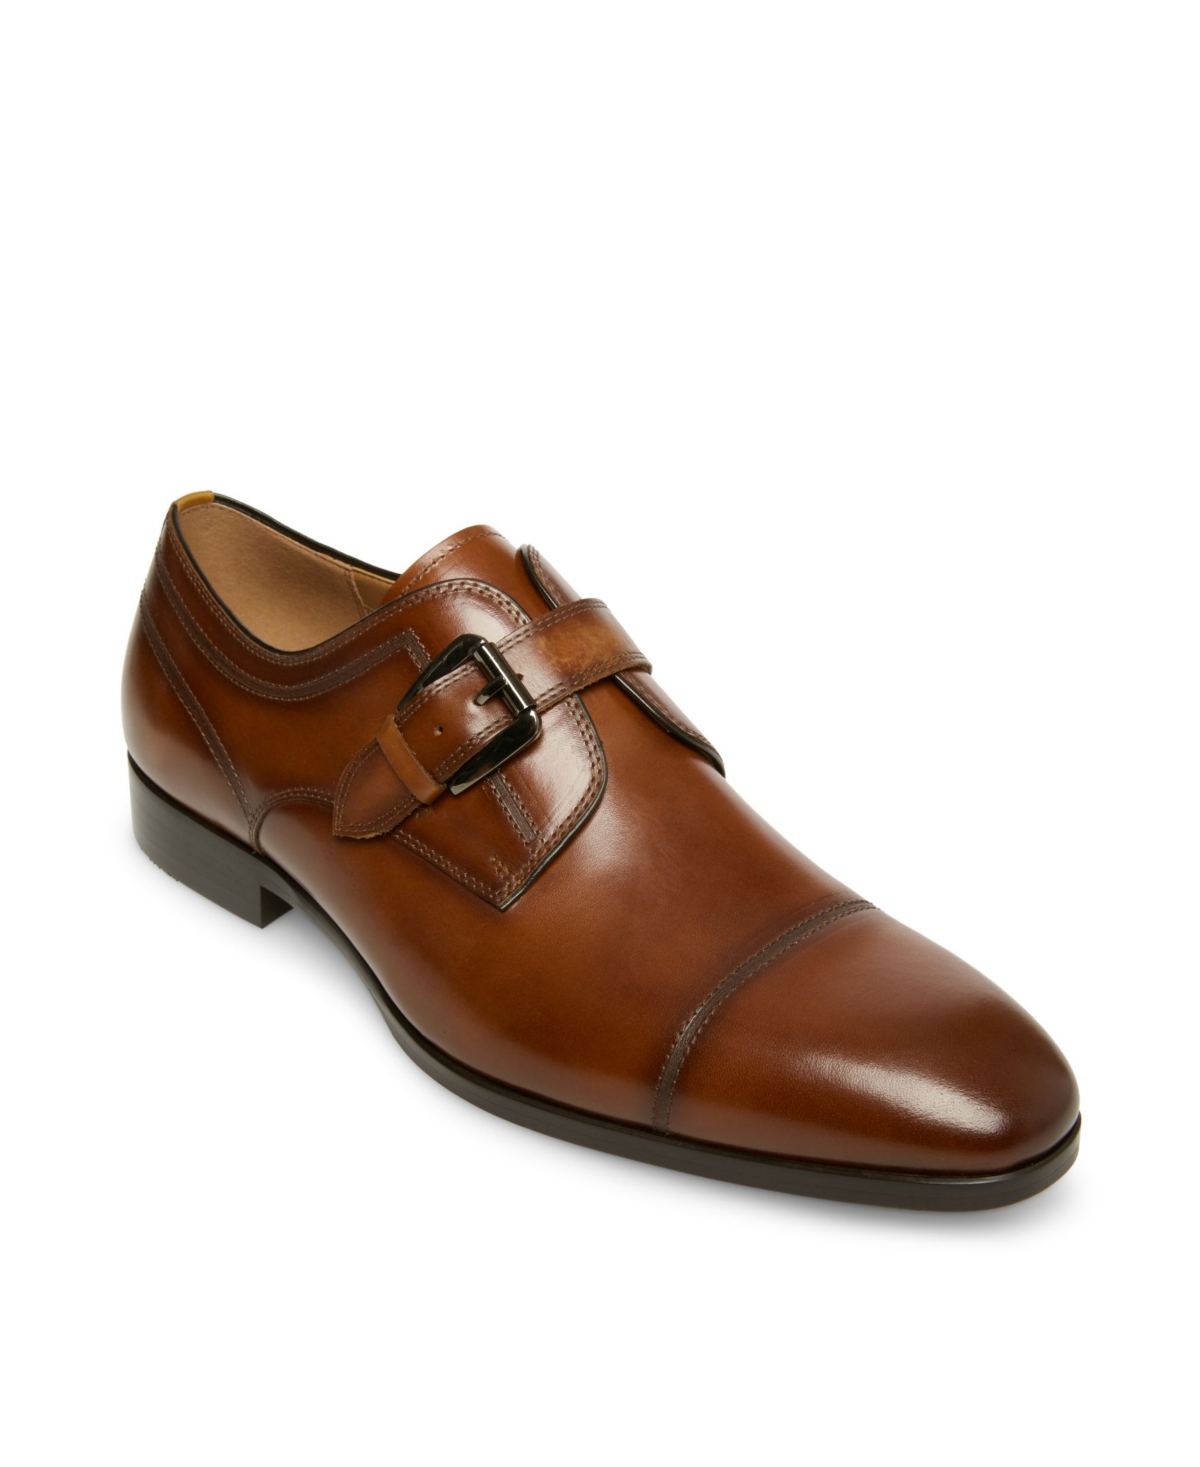 Men's Covet Loafer Shoes - Cognac Leather